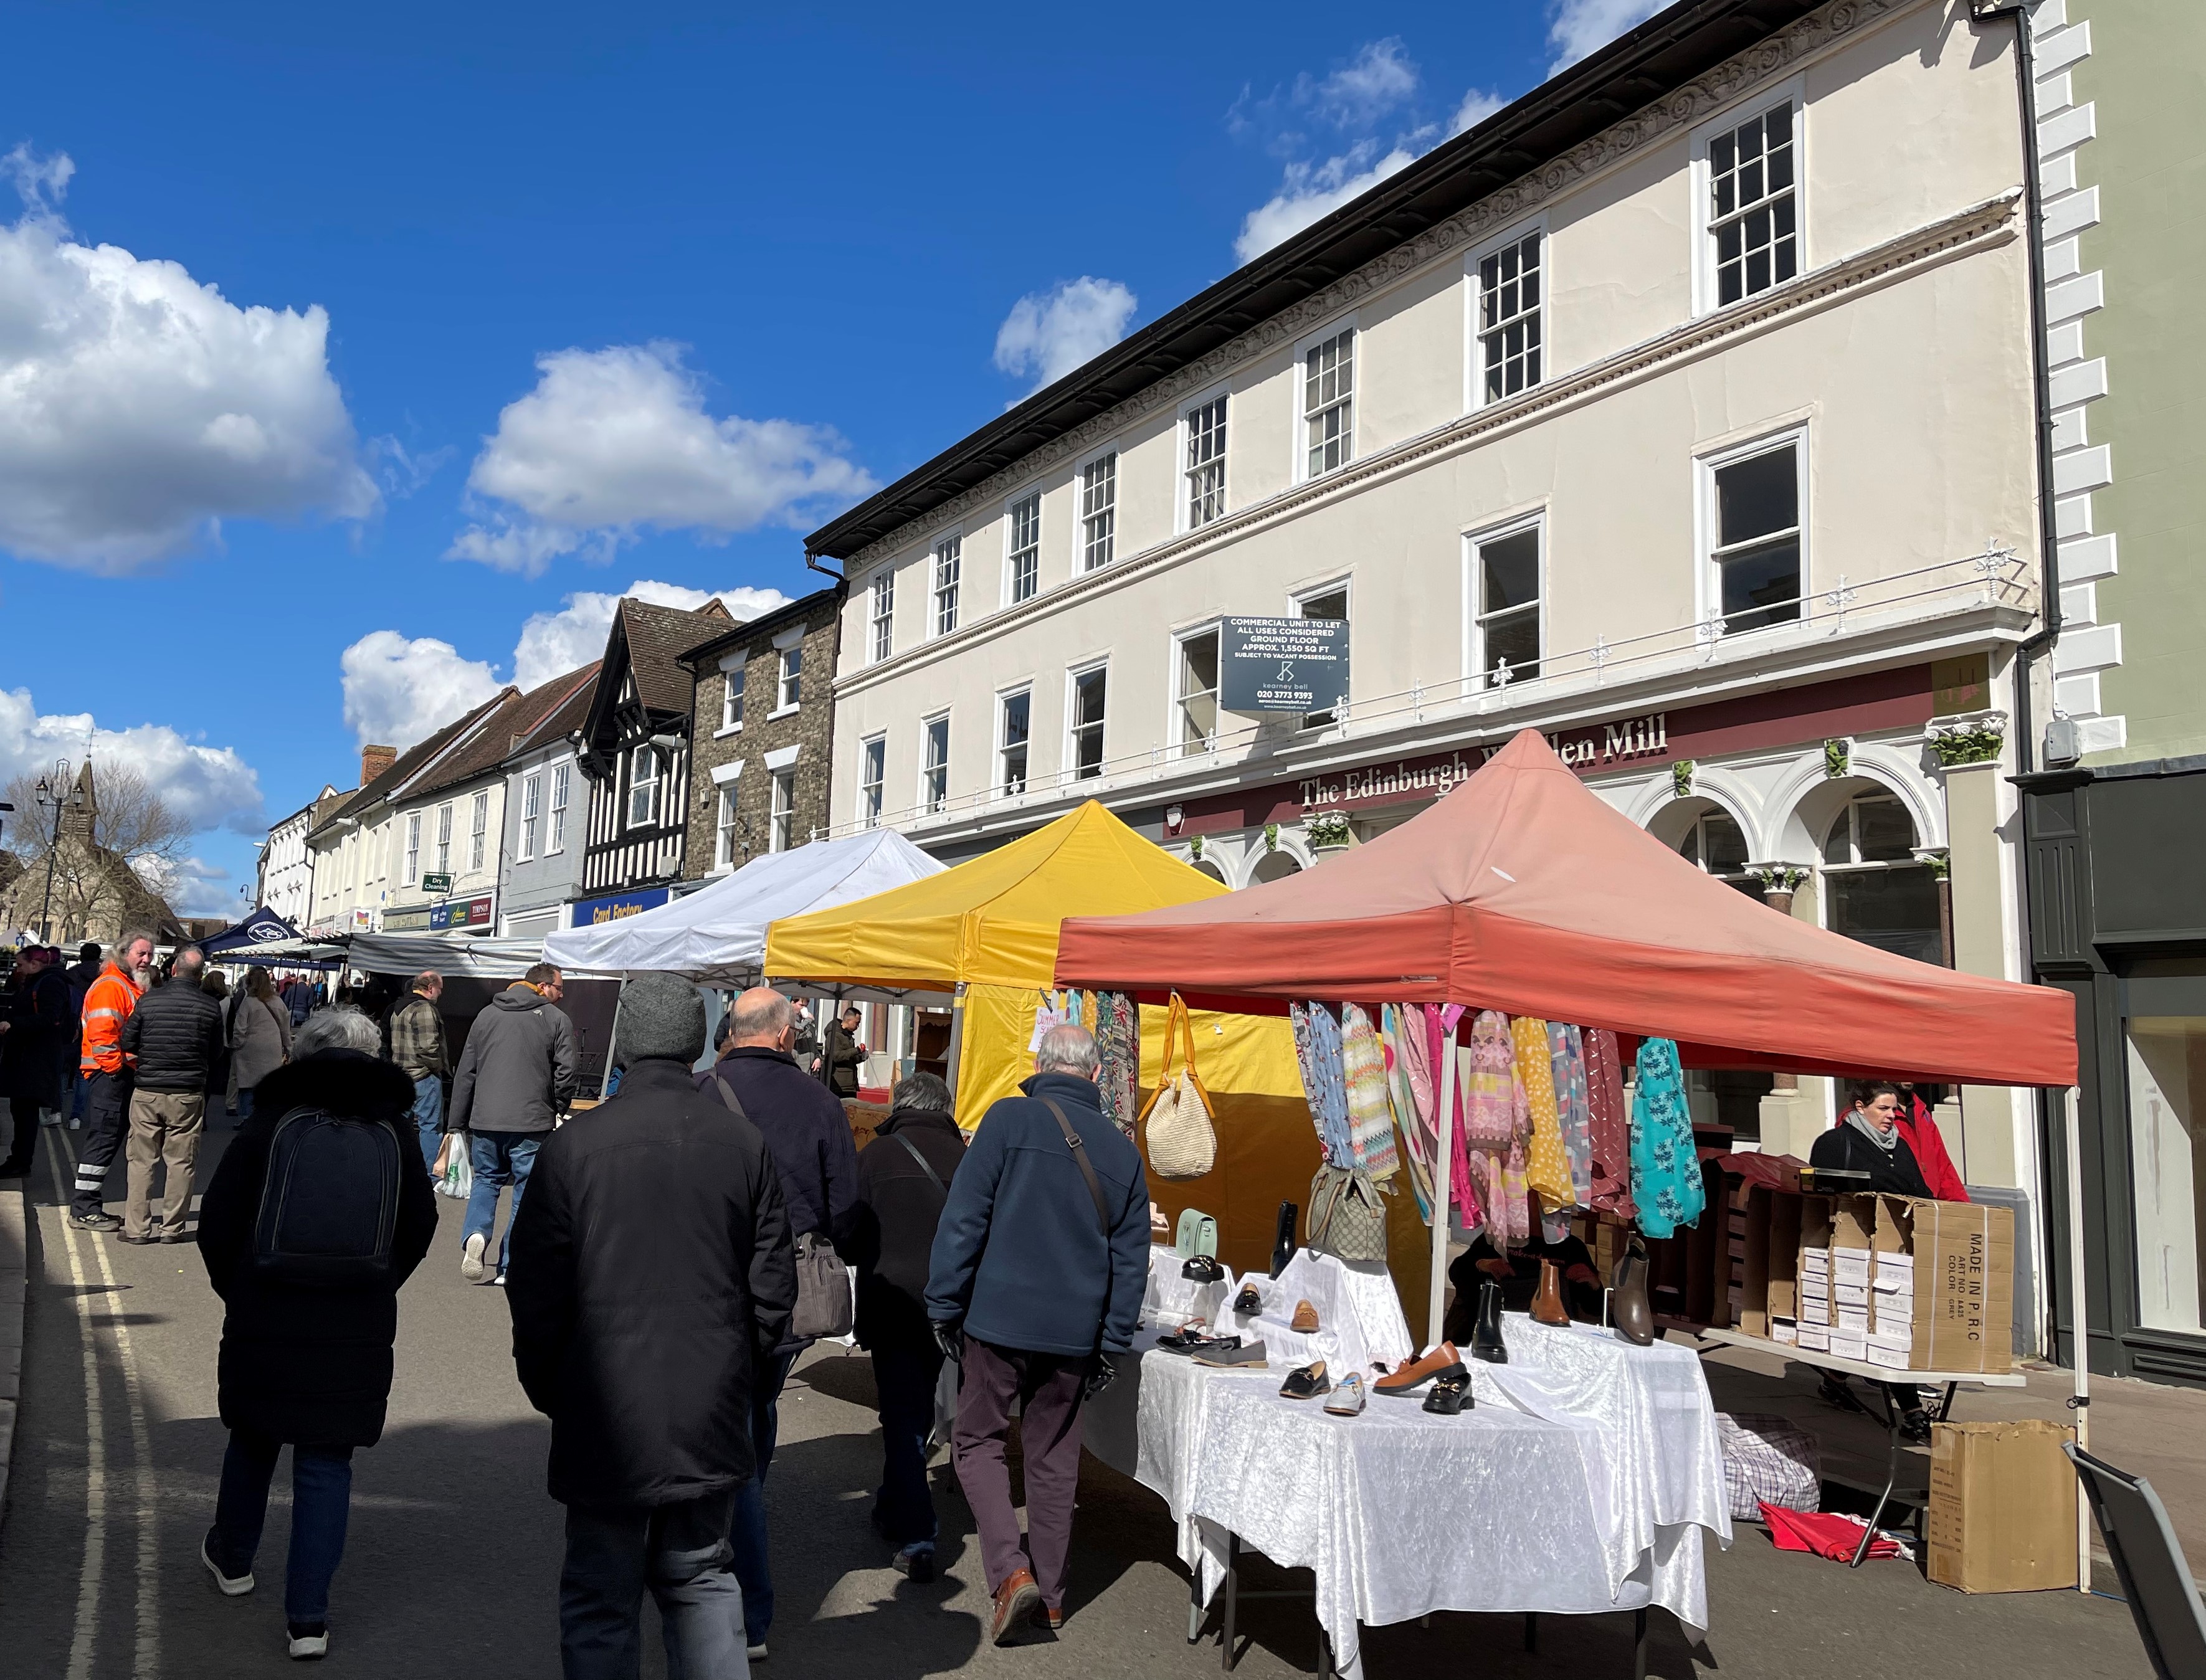 Market stalls in Bury St Edmunds